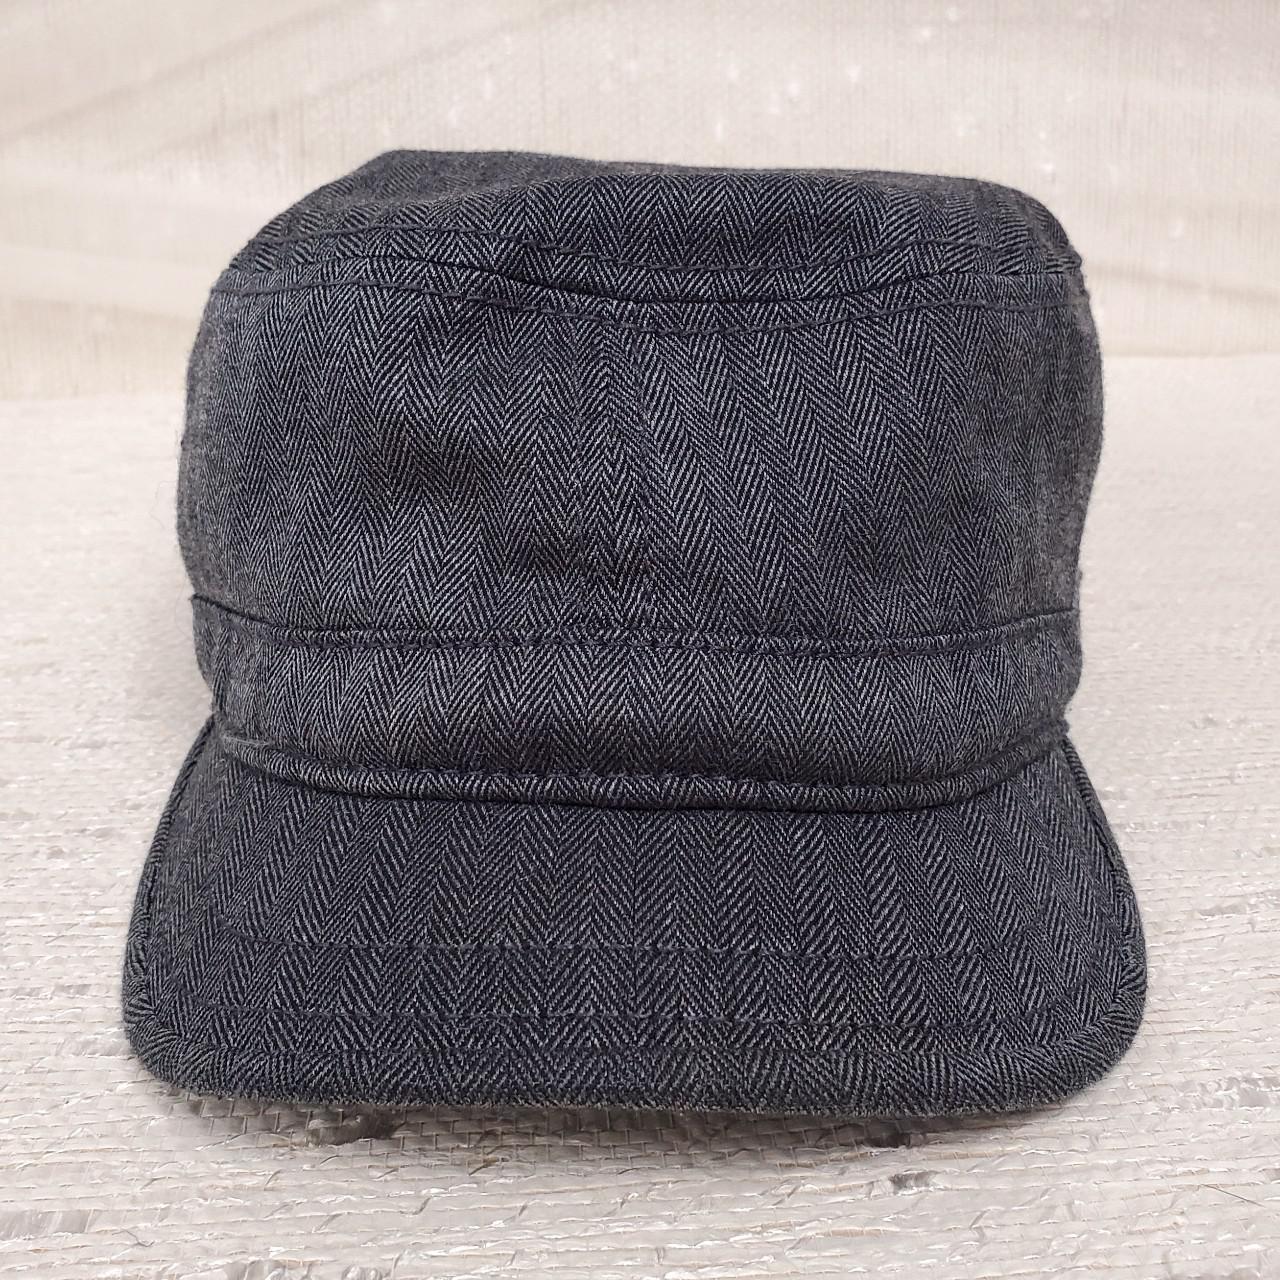 Product Image 2 - Y2k gray newsboy hat

Coal Headwear